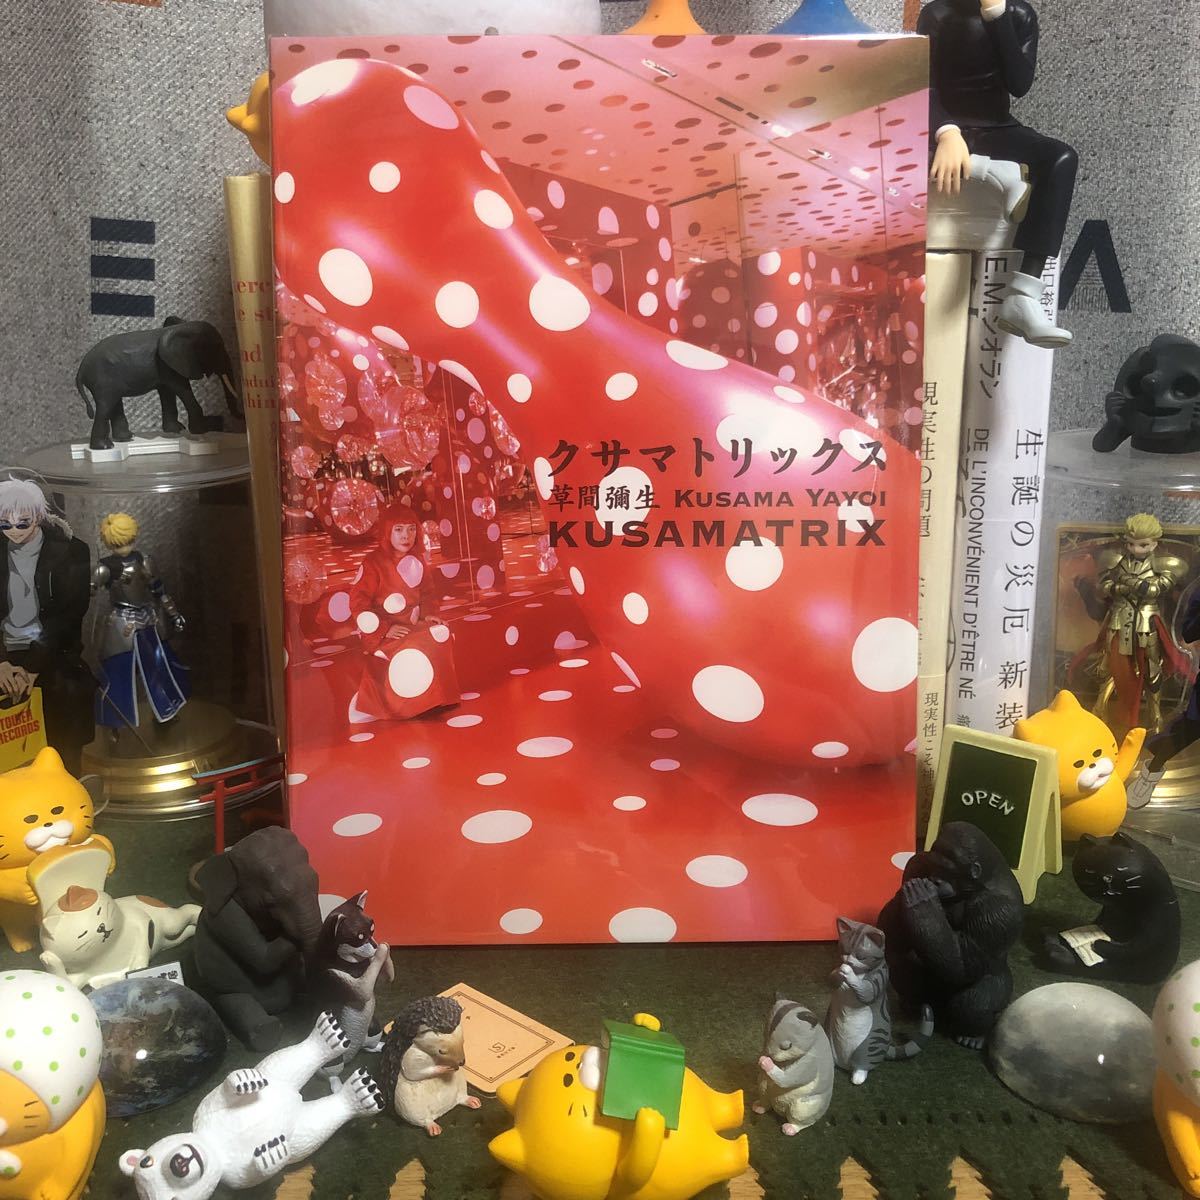 Kusa-Matrix Yayoi Kusama, Malerei, Kunstbuch, Sammlung von Werken, Illustrierter Katalog